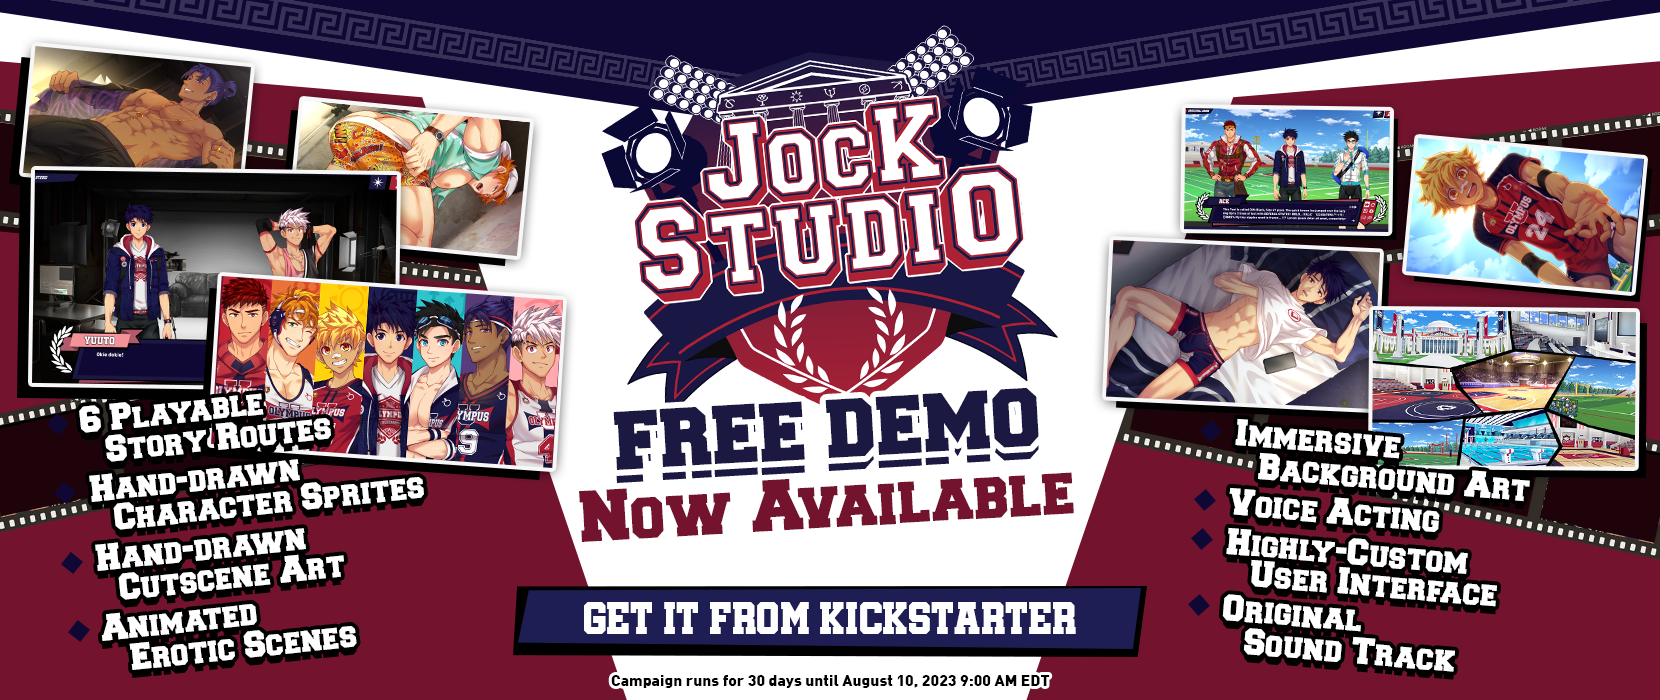 Jock Studio System Requirements - Can I Run It? - PCGameBenchmark